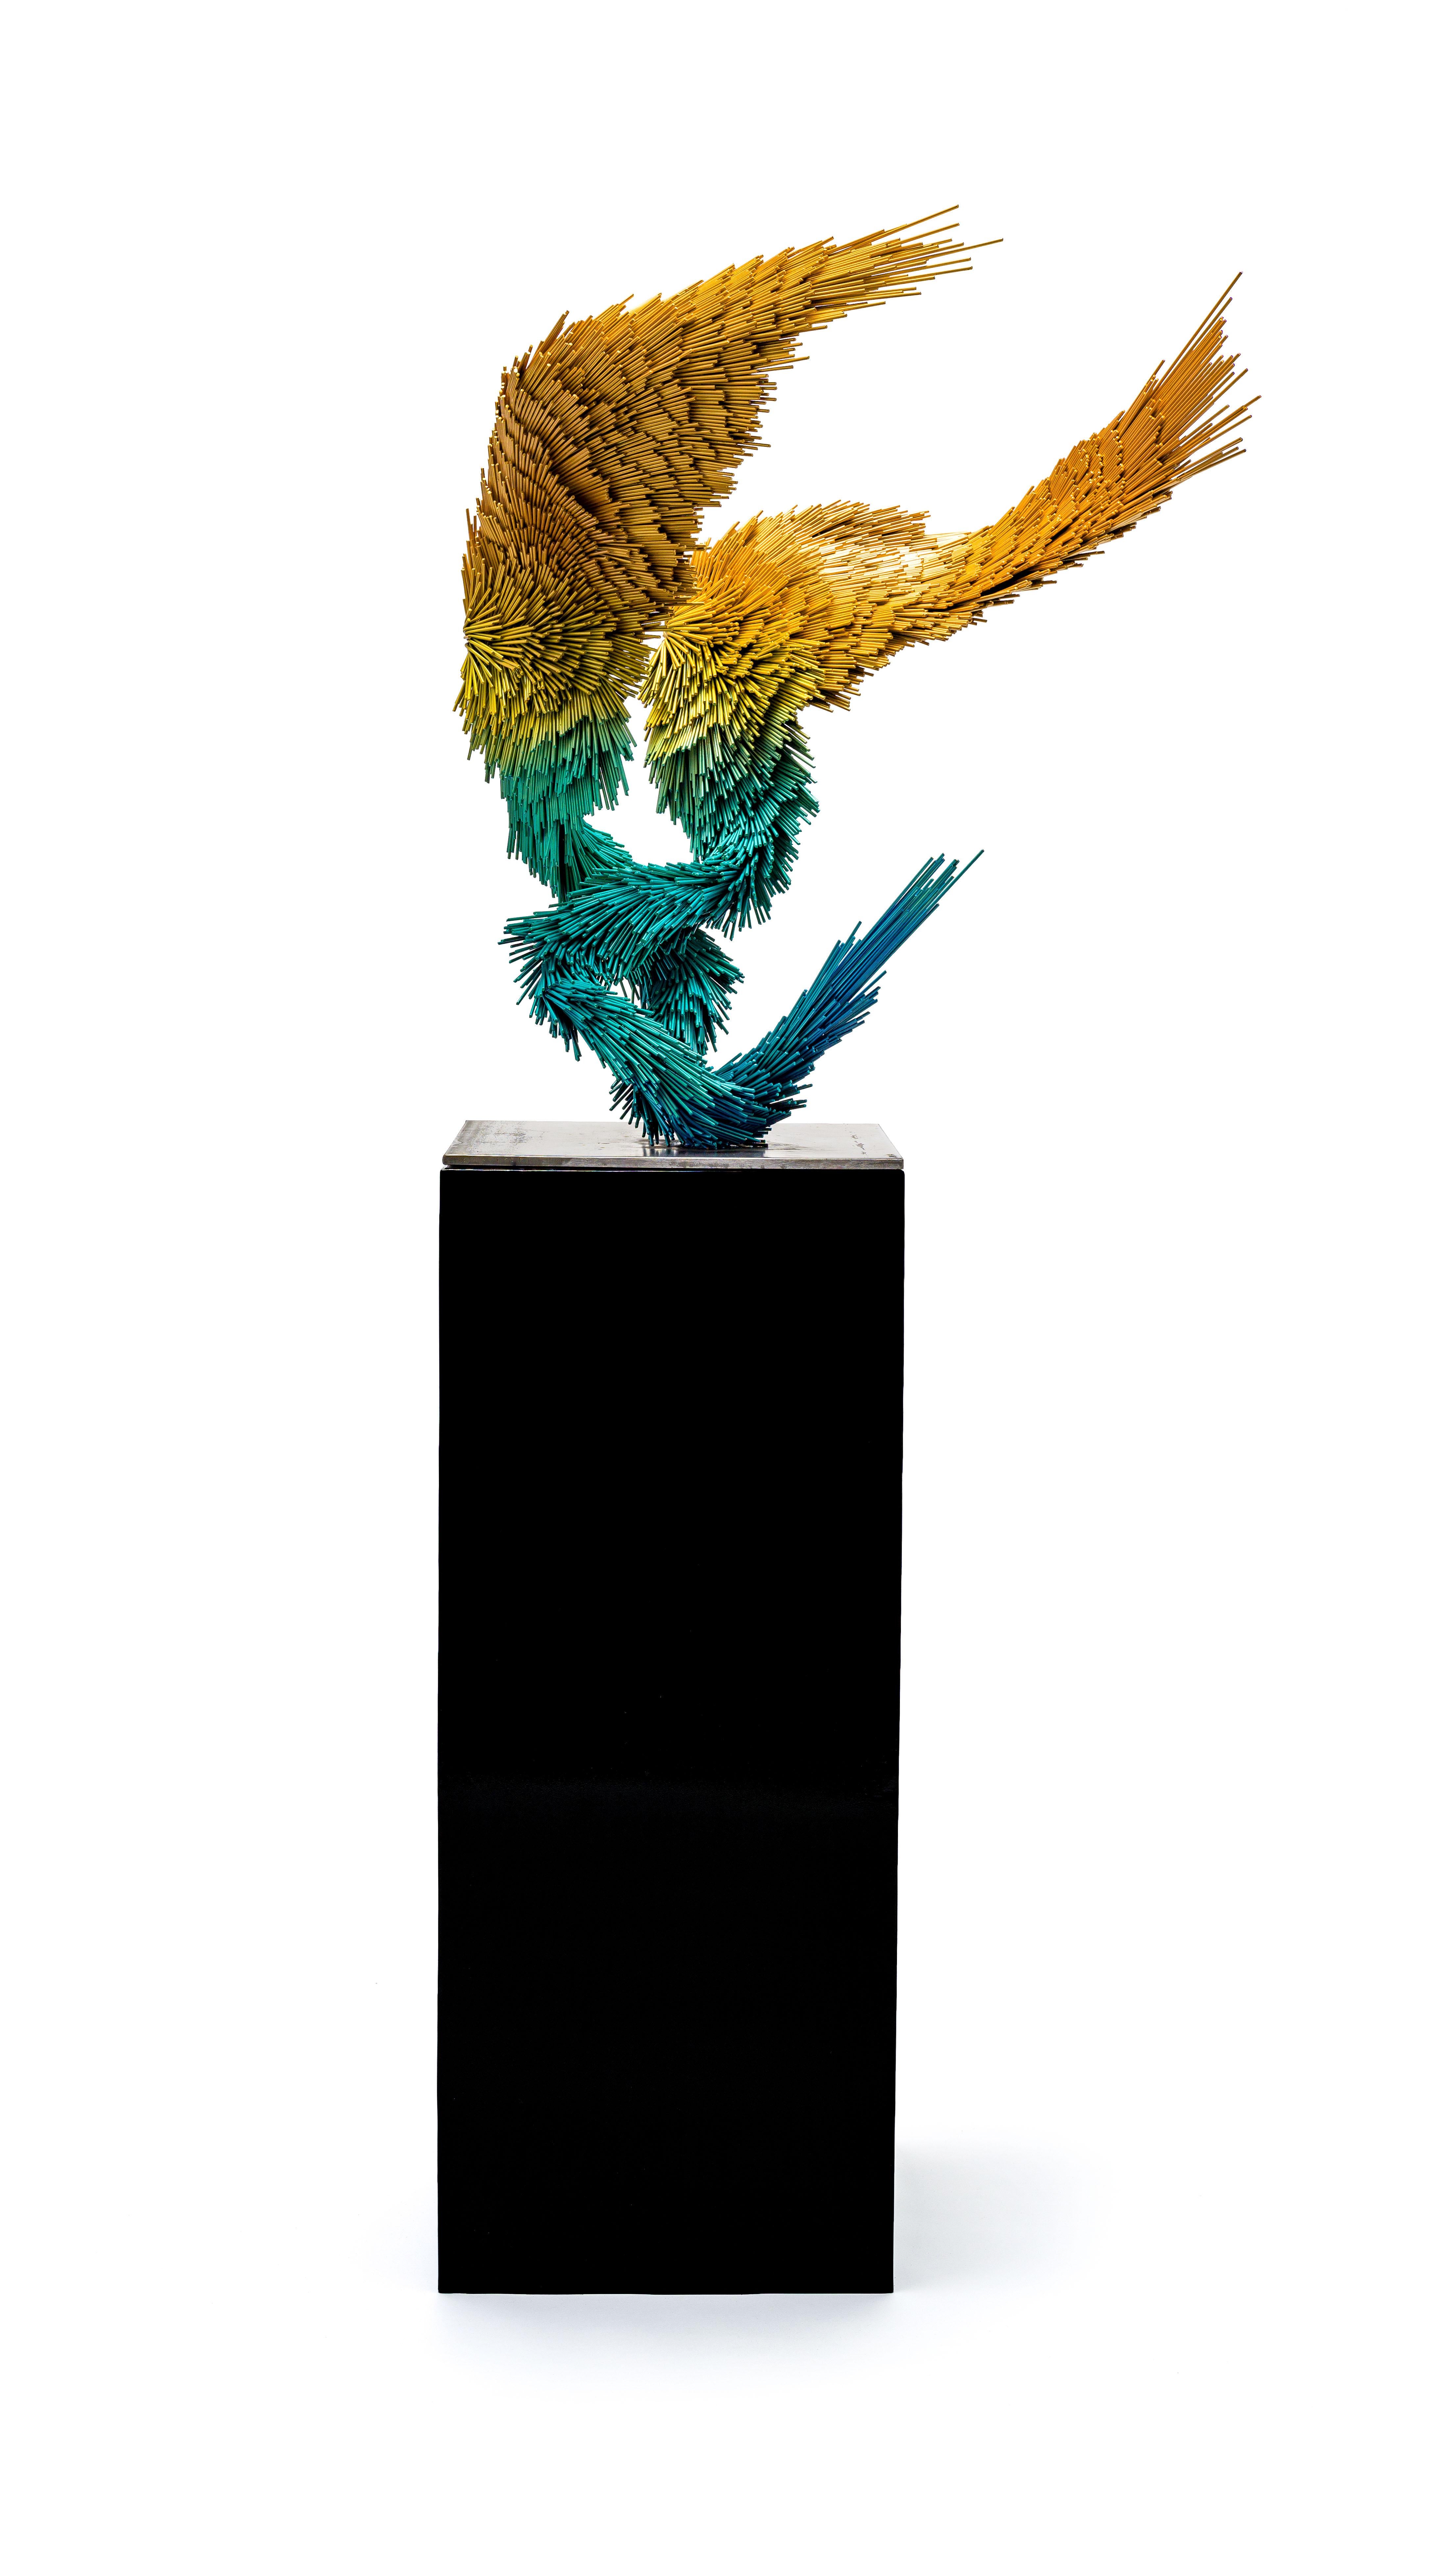 Fleeting Murmur, Steel contemporary bird sculpture in yellow, green and blue - Contemporary Sculpture by Jake Michael Singer